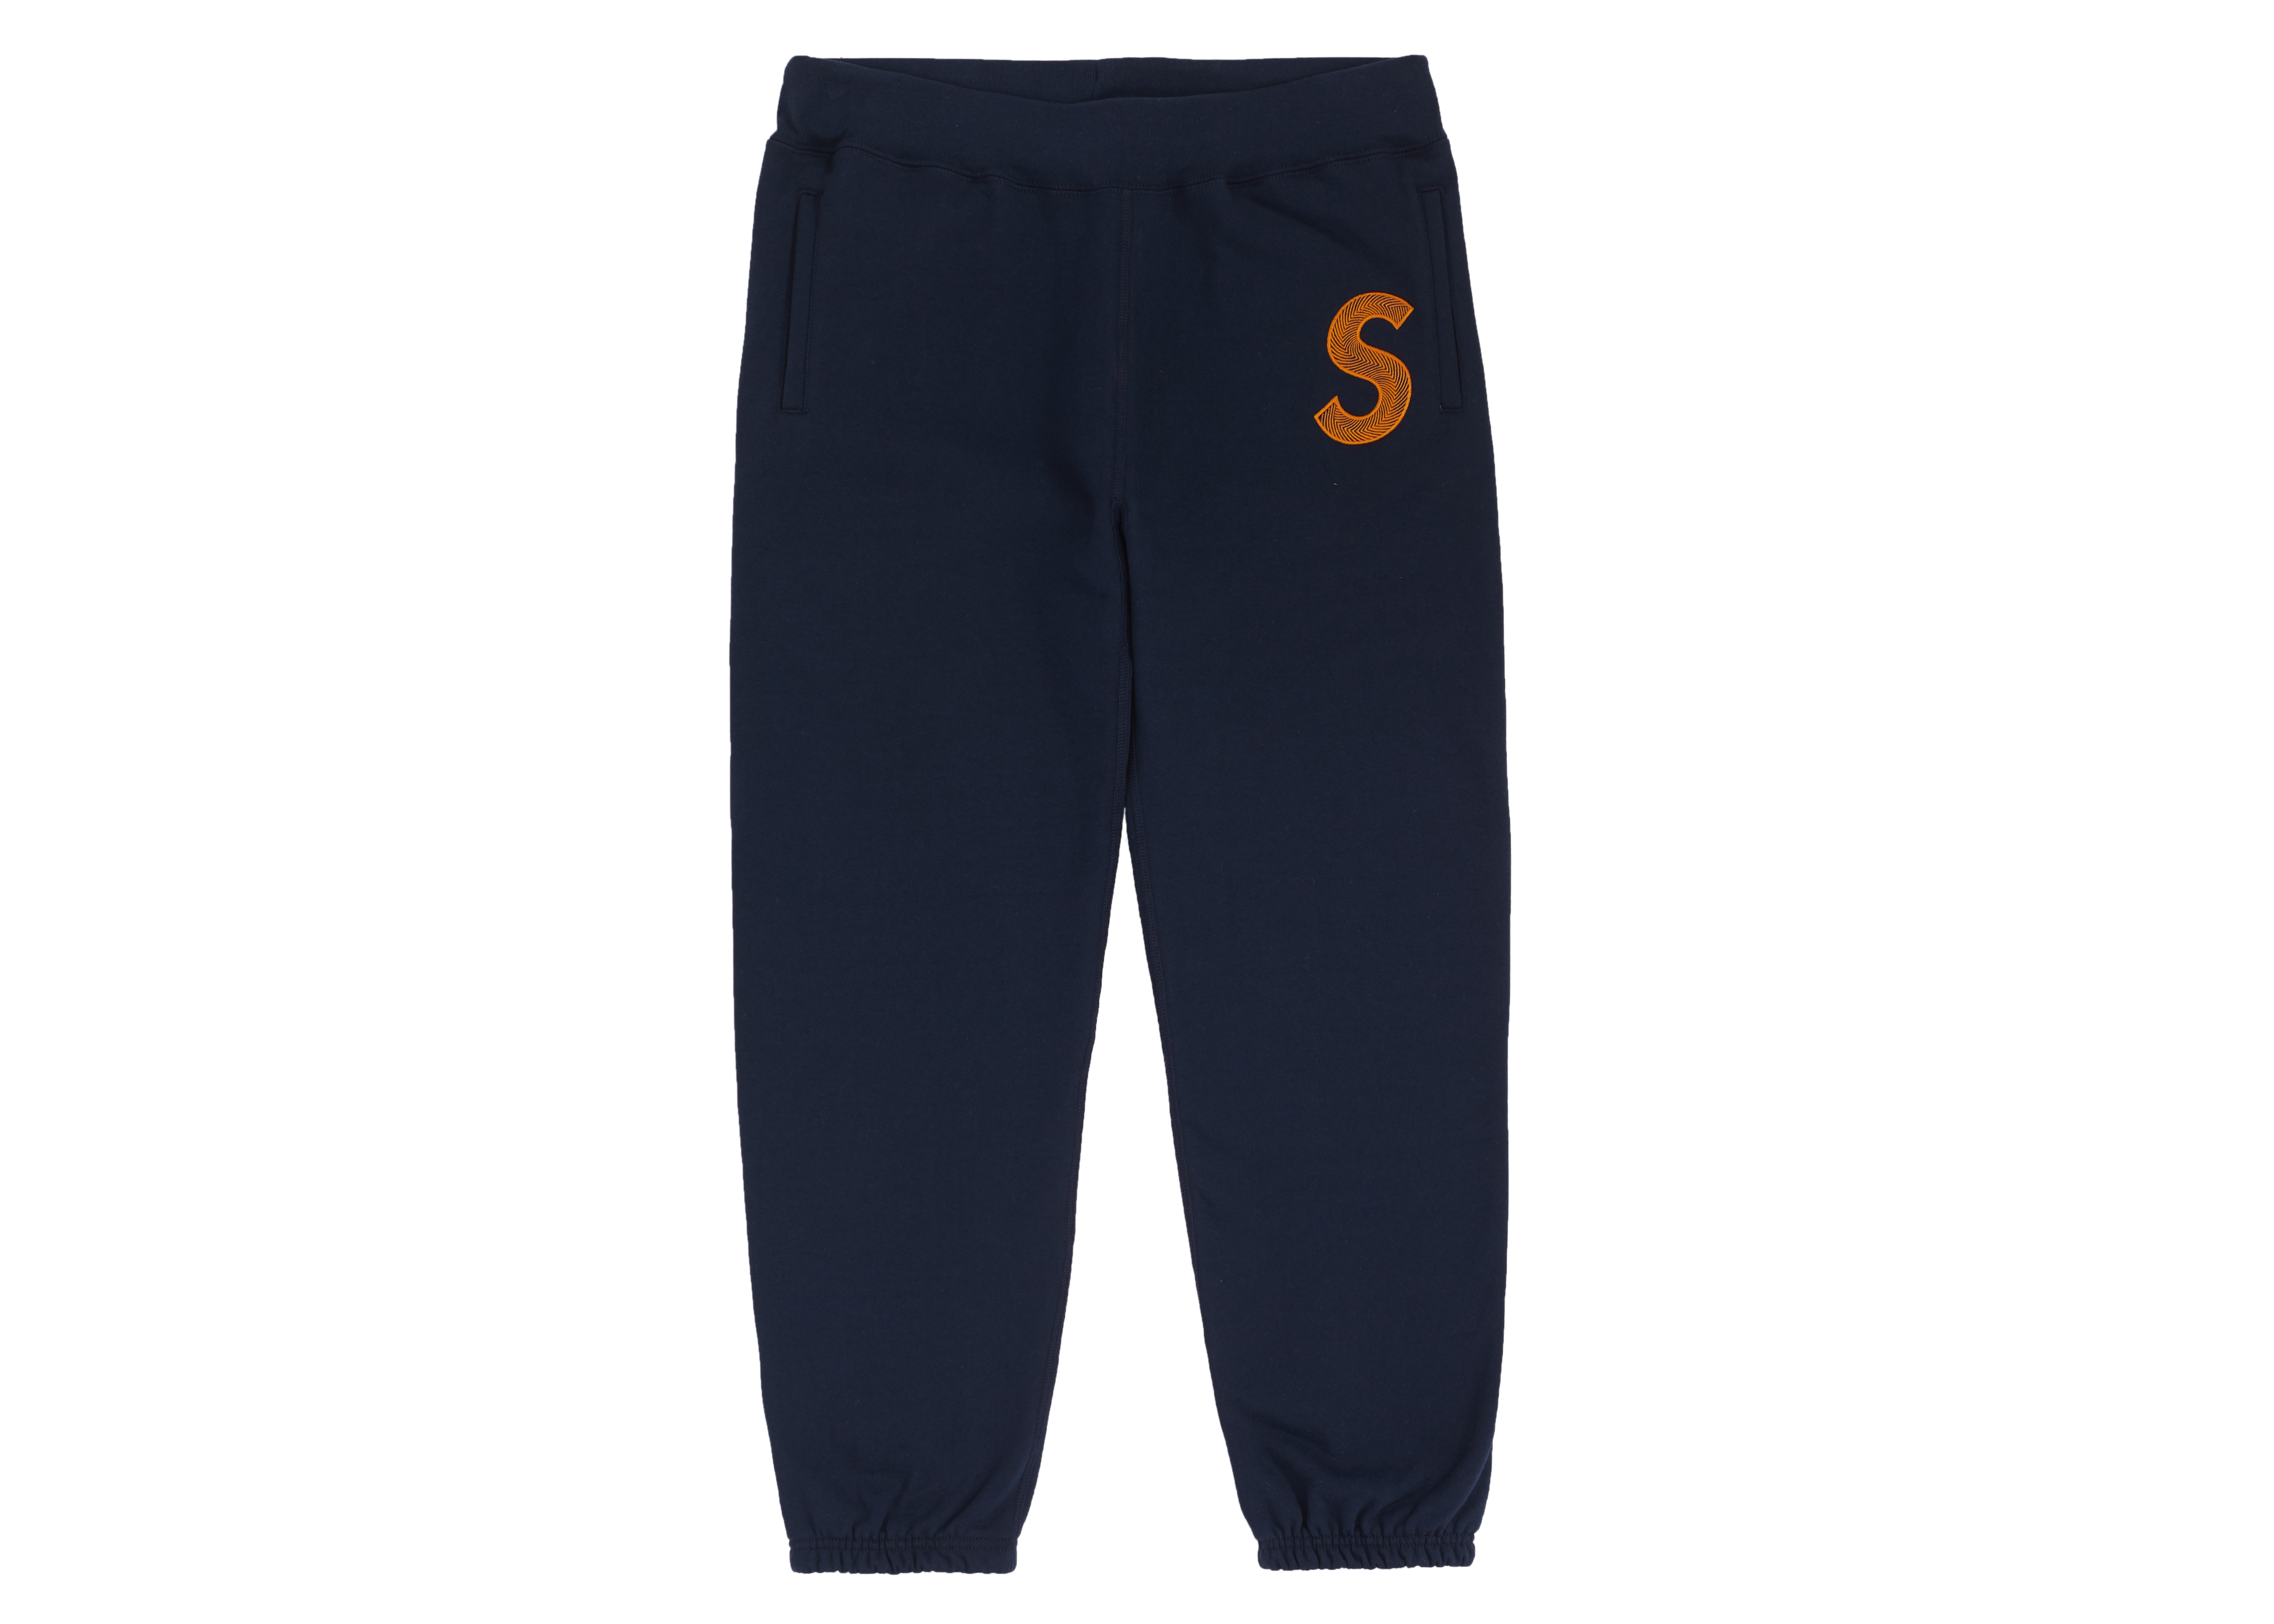 Supreme S Logo Sweatpant (SS20) Heather Grey Men's - SS20 - US